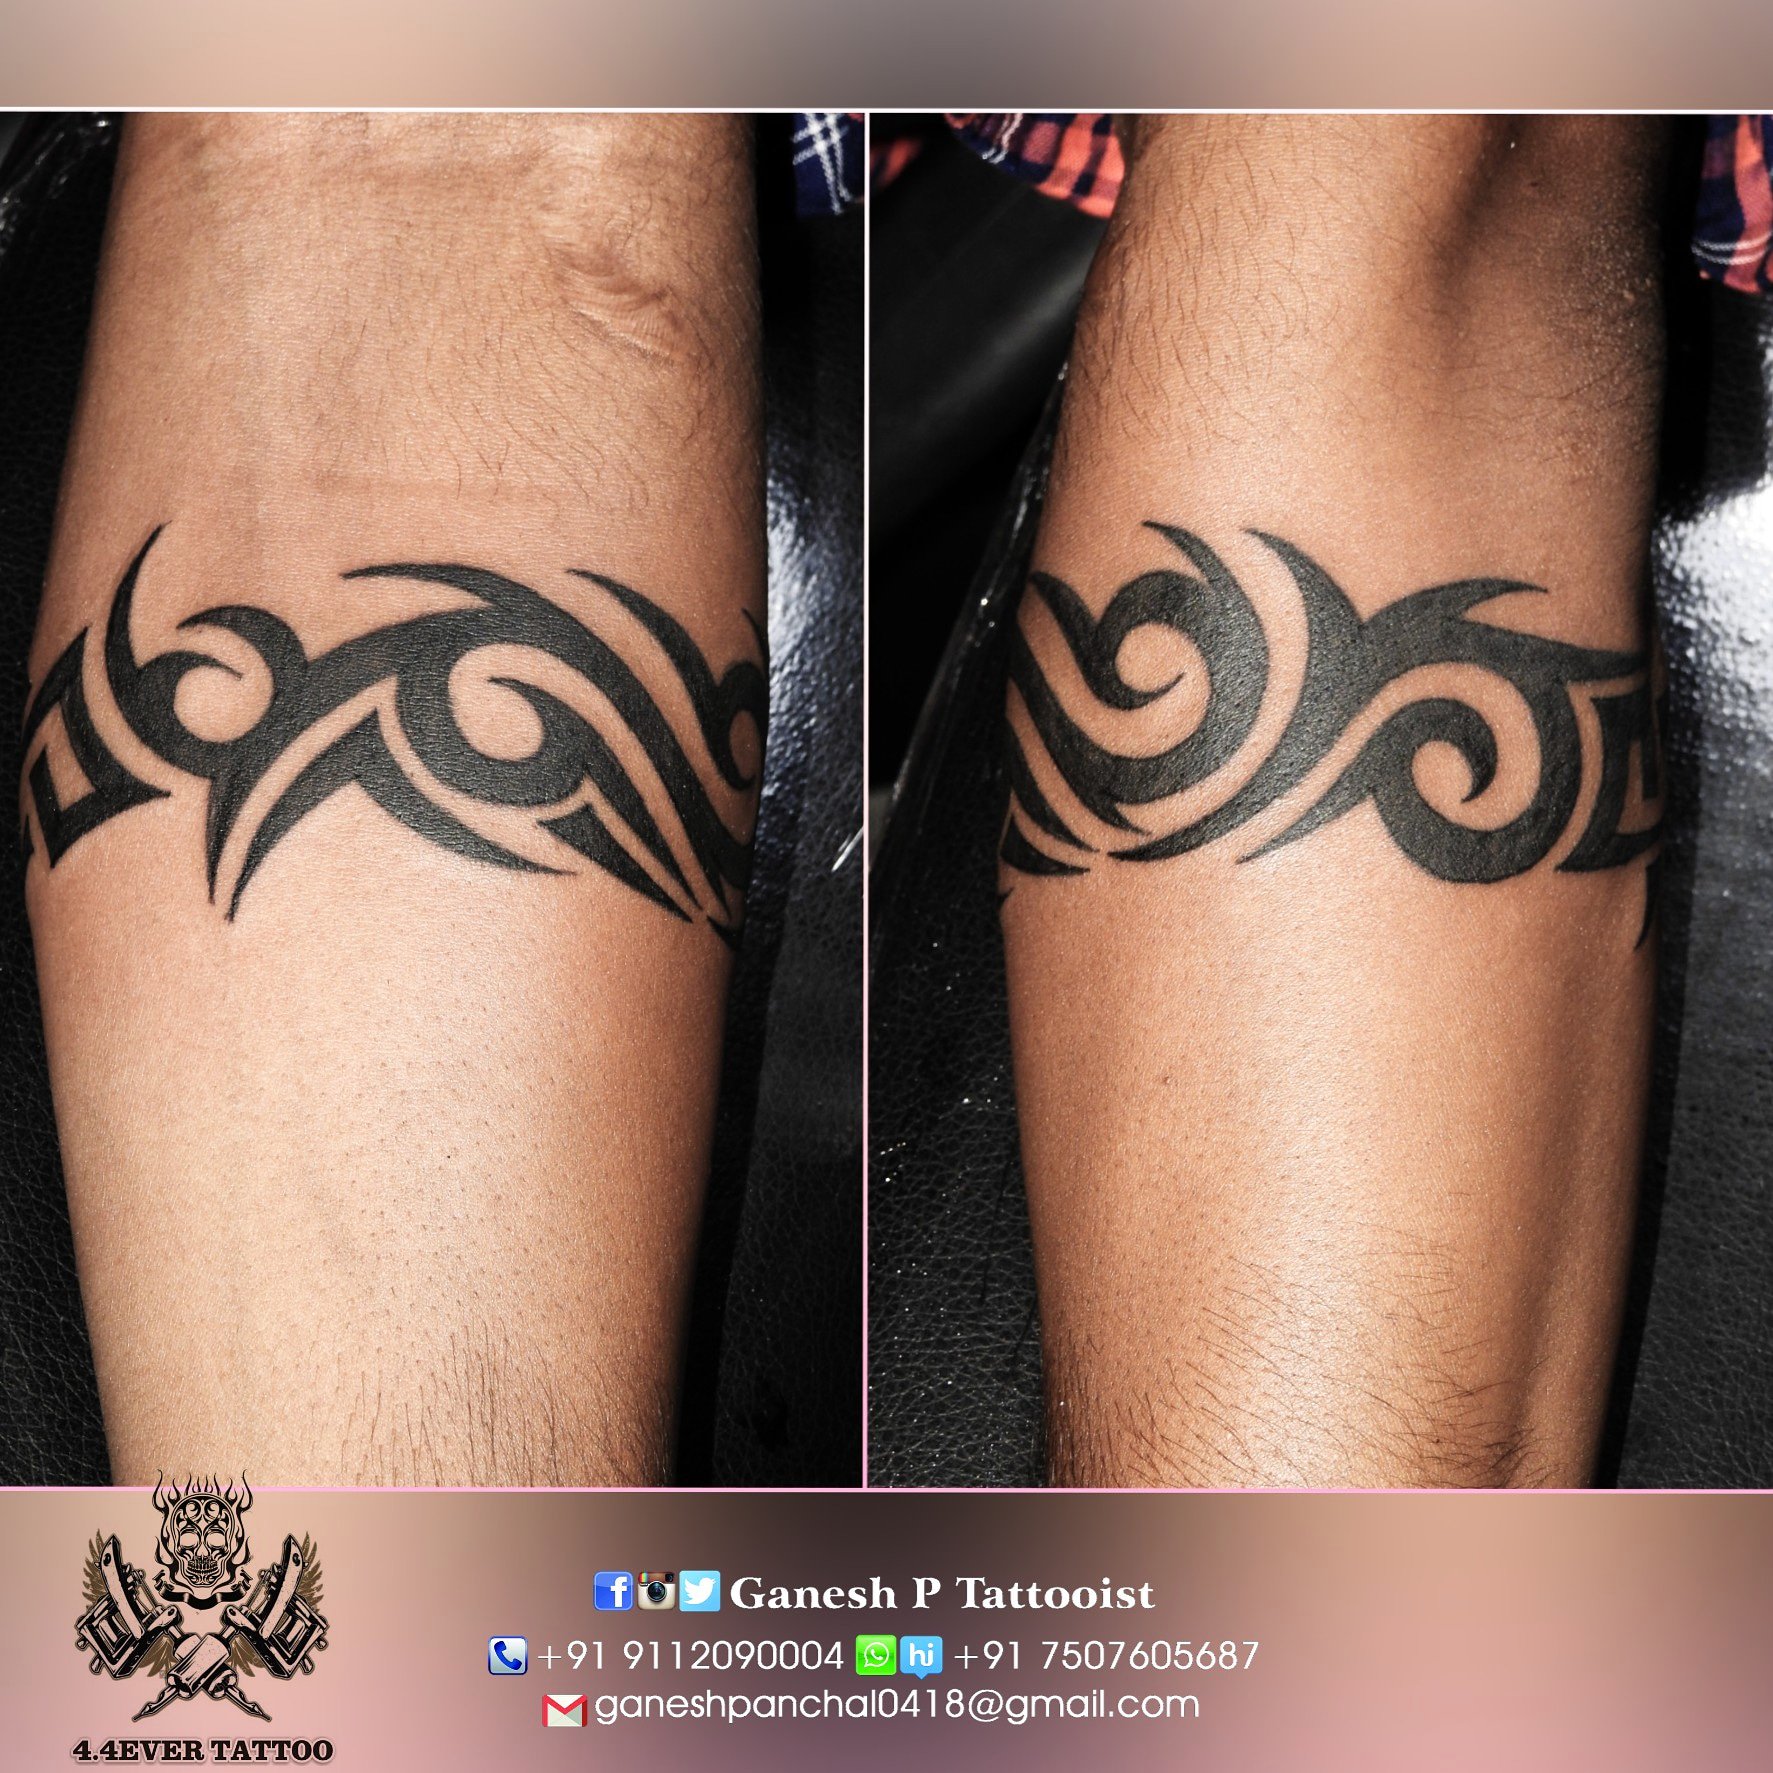 Birgunj Tattoo Center - Band Tattoo for Men 👉Address: Birgunj, CDO Office  #bandtattoo #bandtattoodesign #roundtattoo #cutetattoo #tattoo  #tattoolovers #tattooart #besttattoos #tattoodesign #newtattoo  #colorfultattoo #besttattoodesign #Birgunj ...